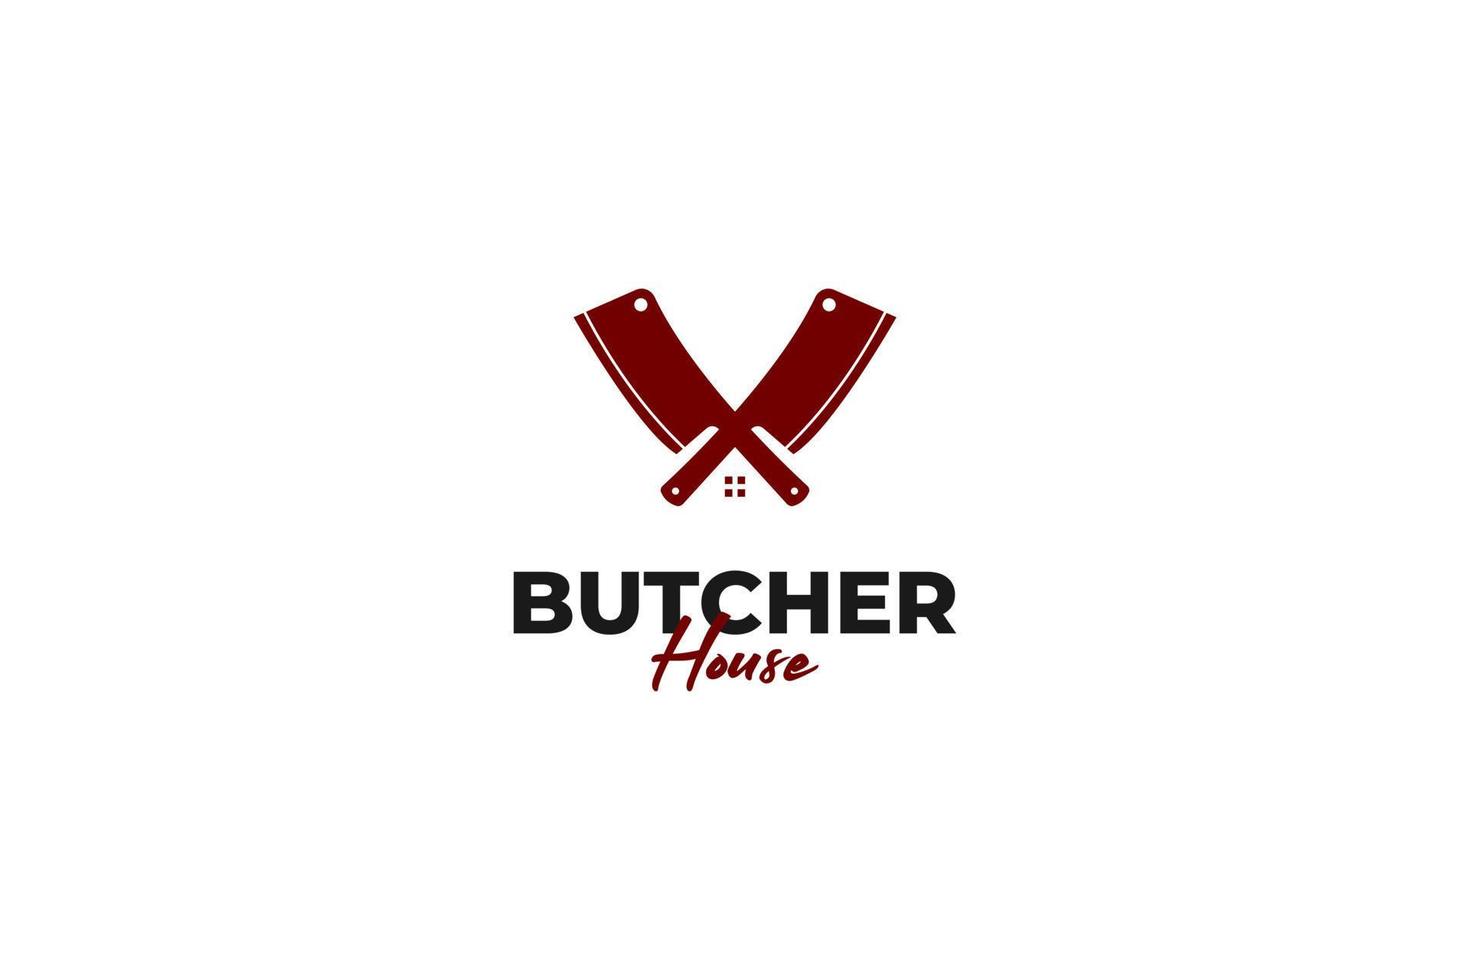 Butcher house logo design vector illustration idea